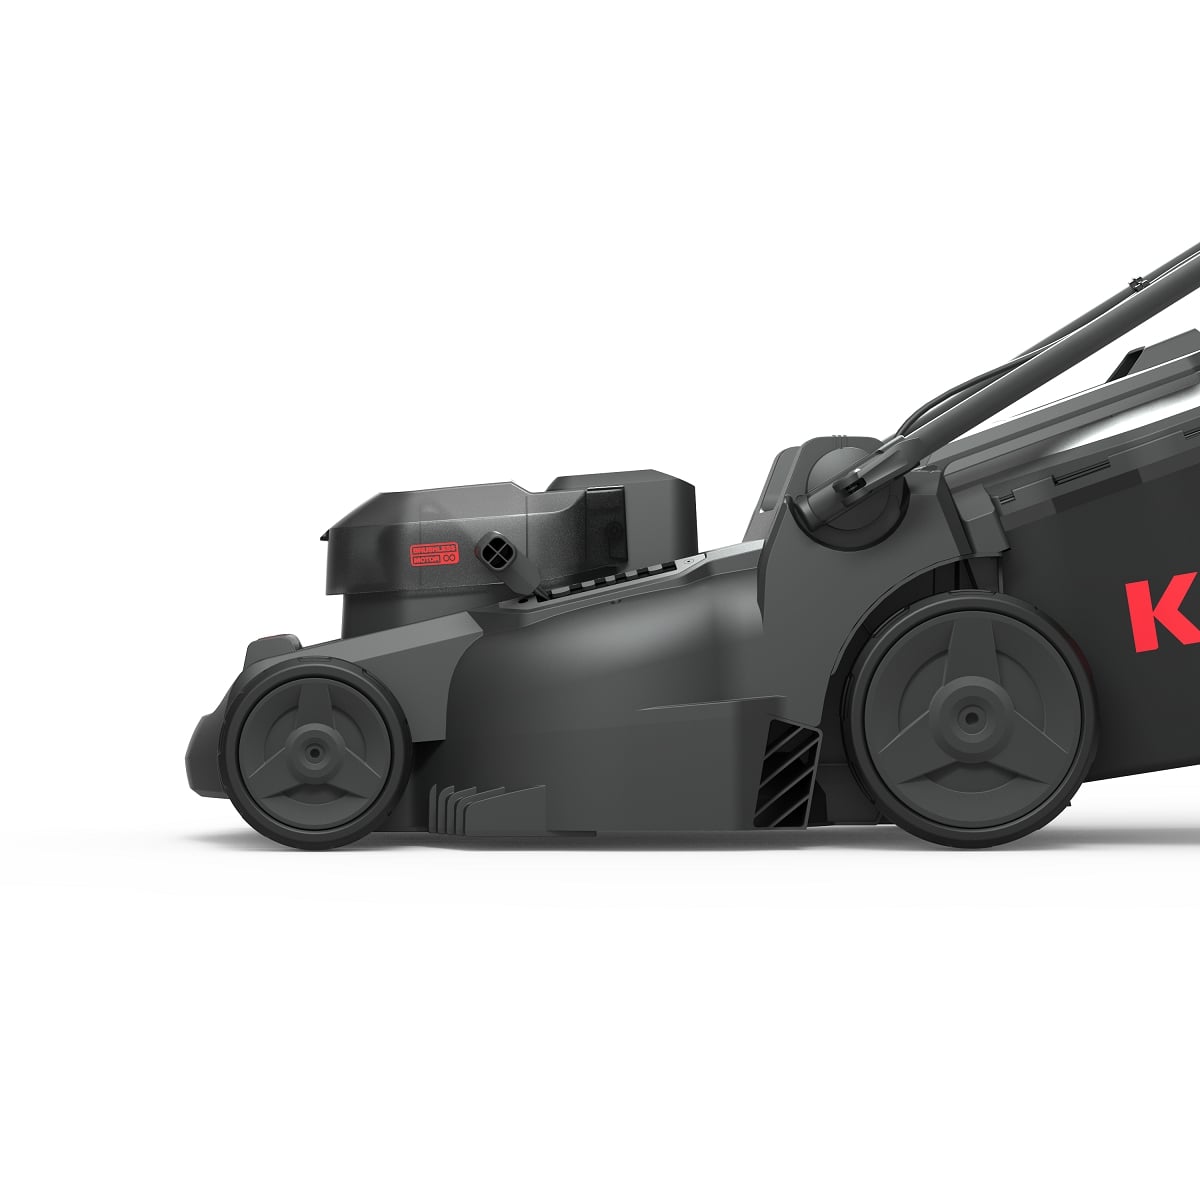 Kress KG745.9 14" Battery Push Lawnmower, Bare Tool